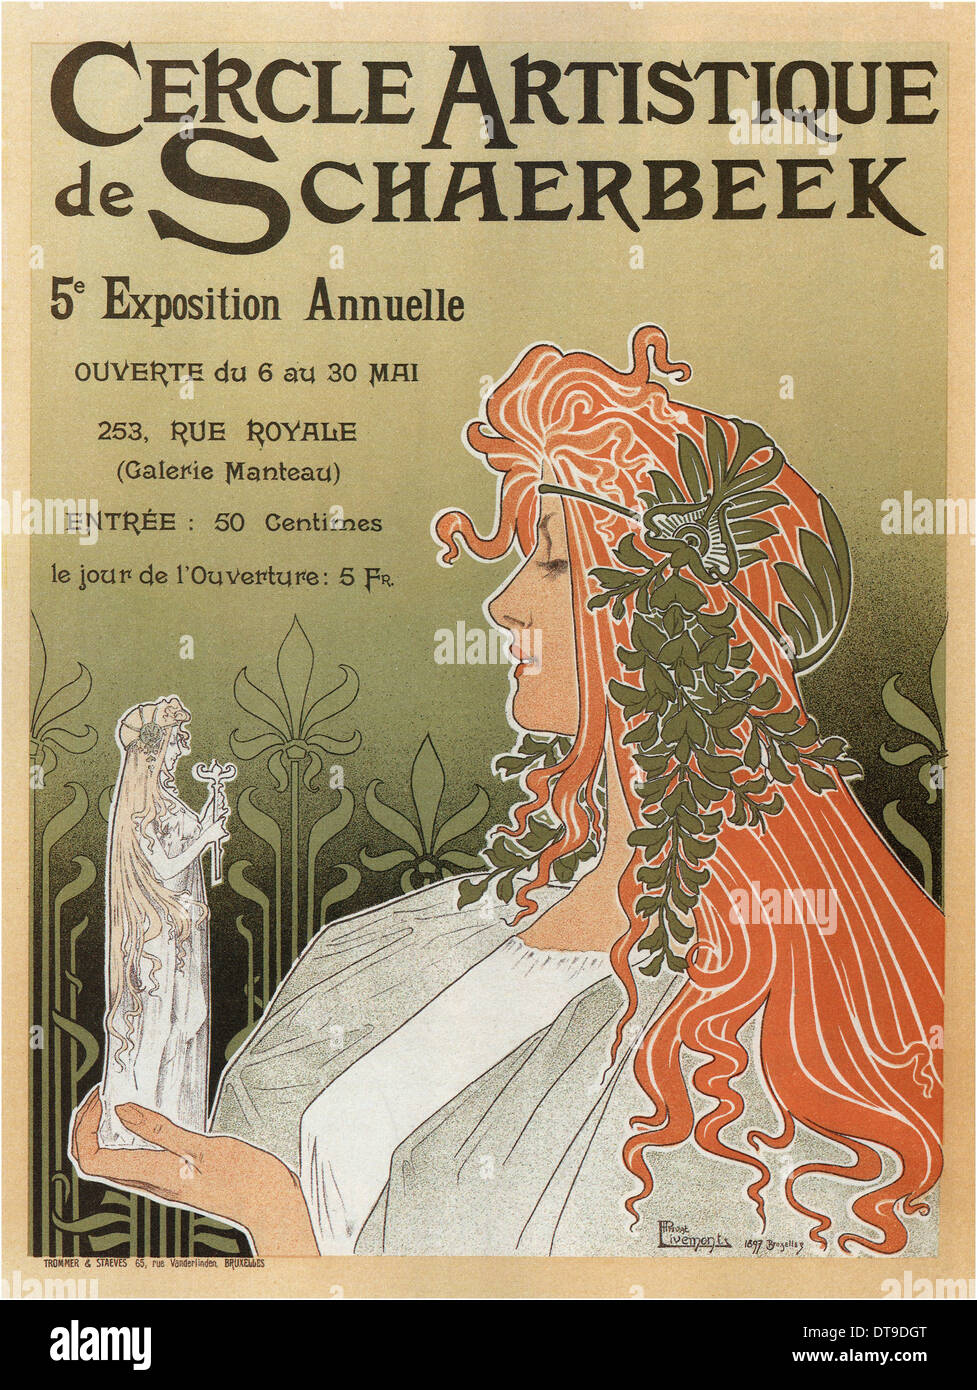 Artistic Club of Schaerbeek, 5th annual show, 1897. Artist: Privat ...